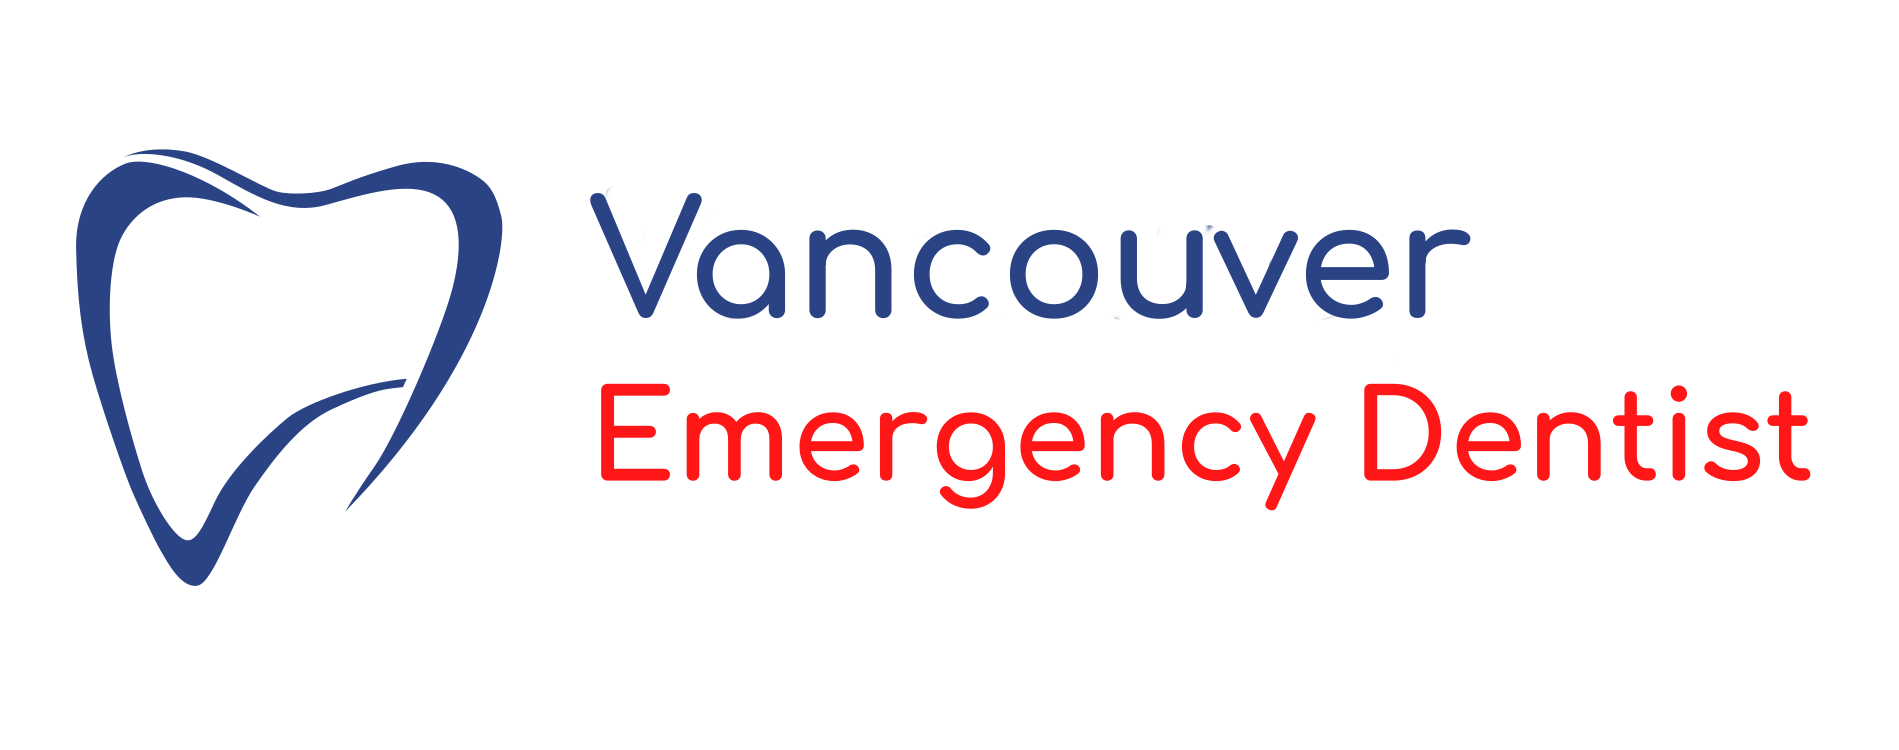 Emergency Dentist in Vancouver